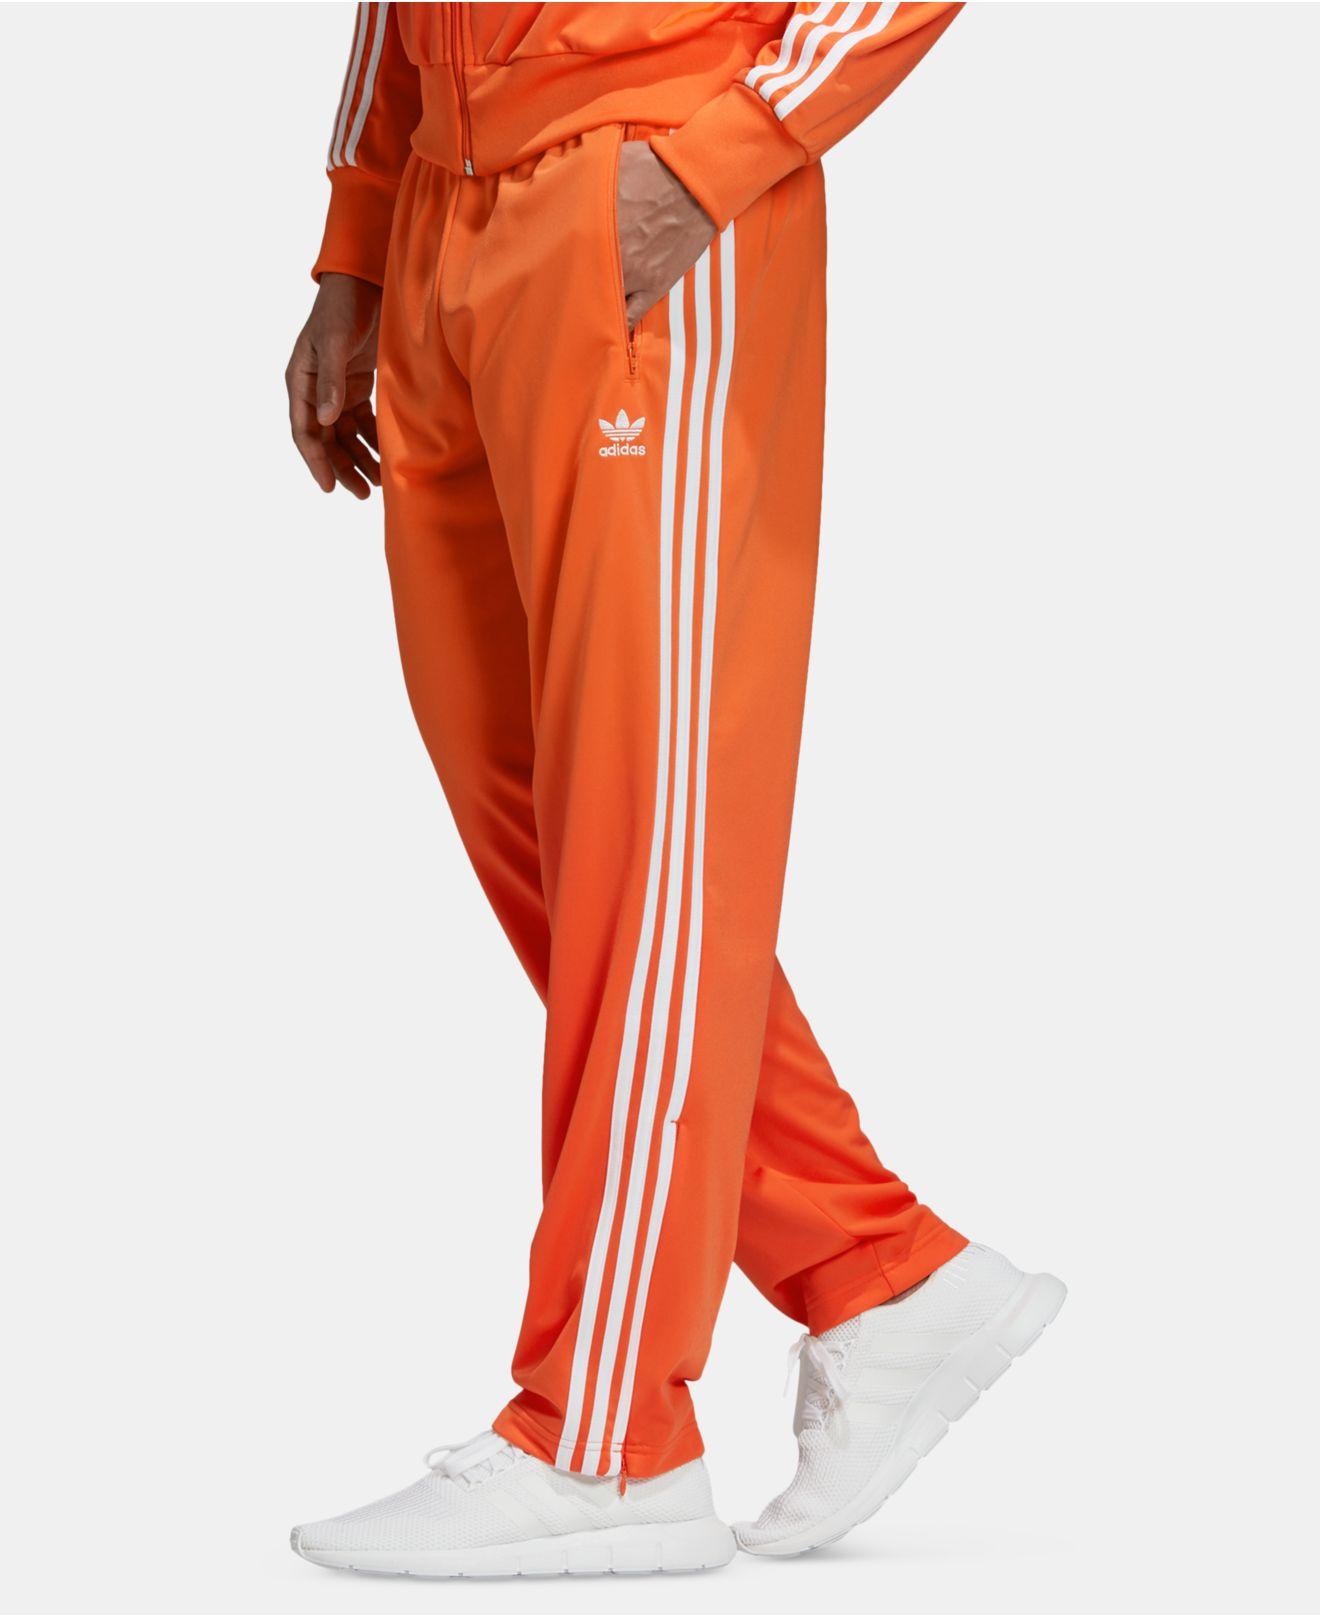 adidas orange pants